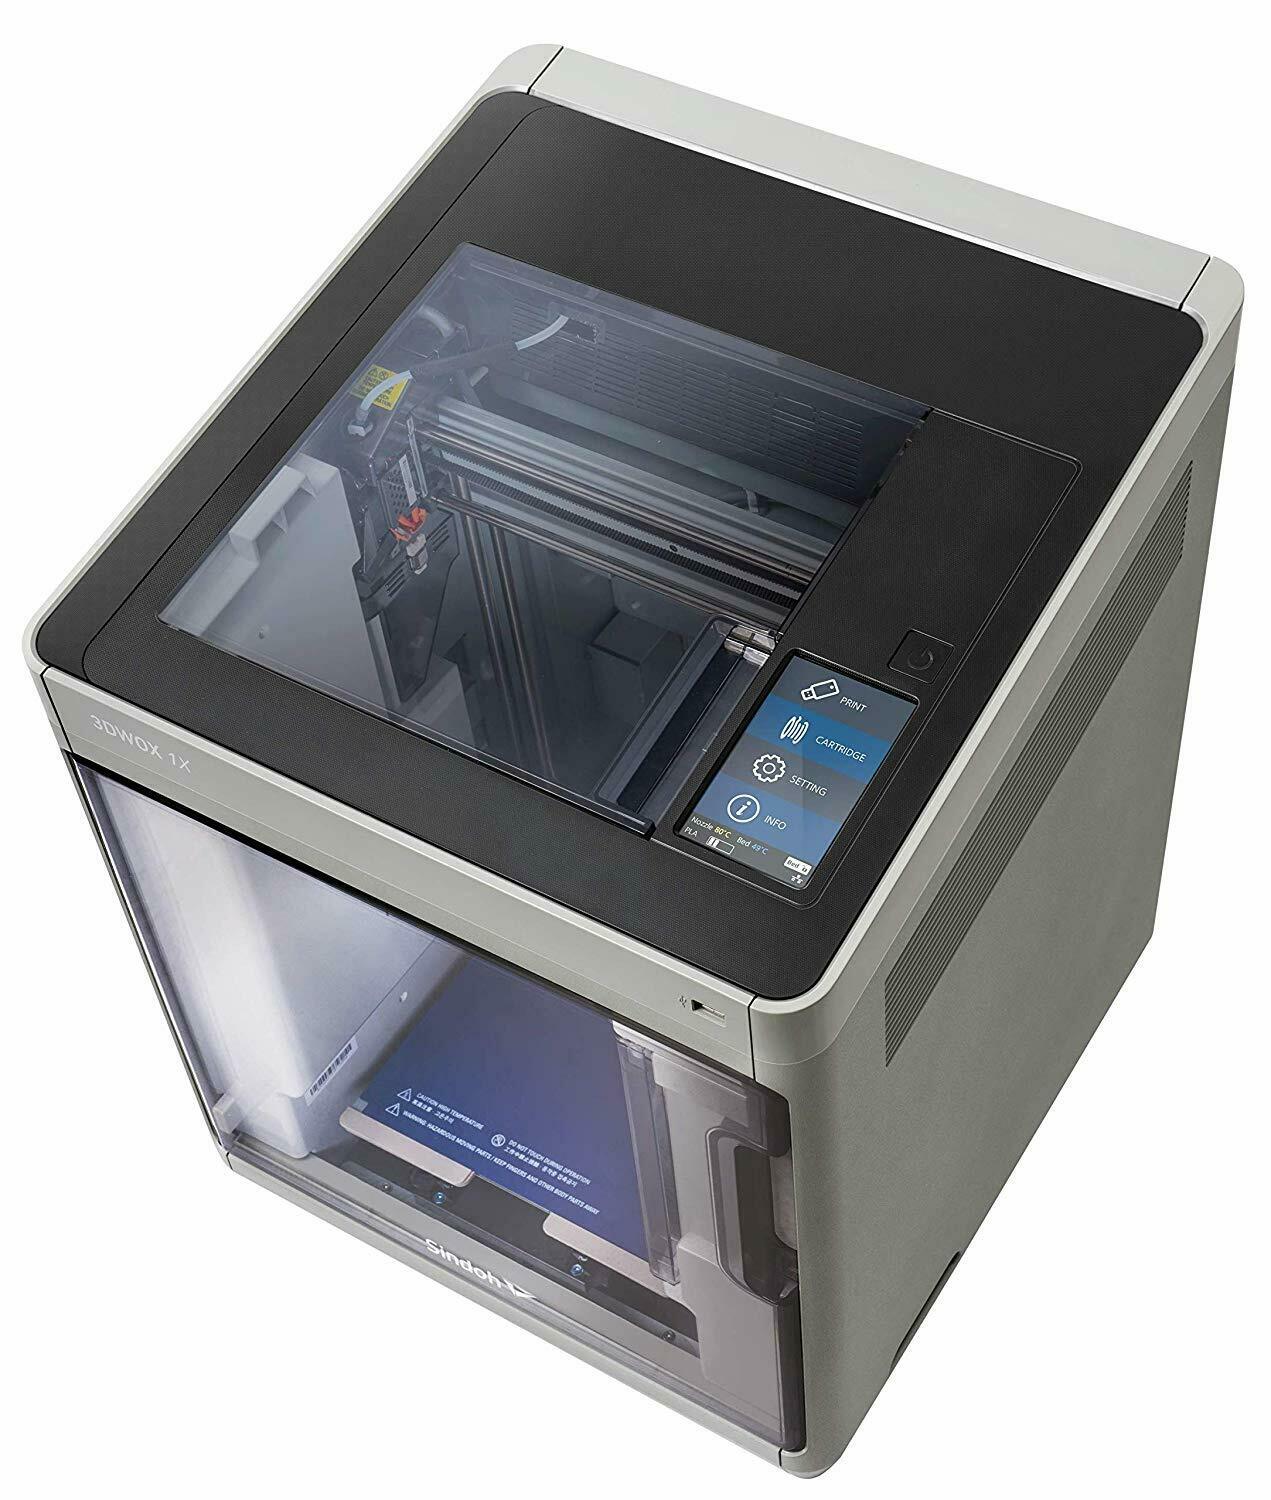 Sindoh 3DWOX 1X 3D Printer industrial [Authorized Seller]